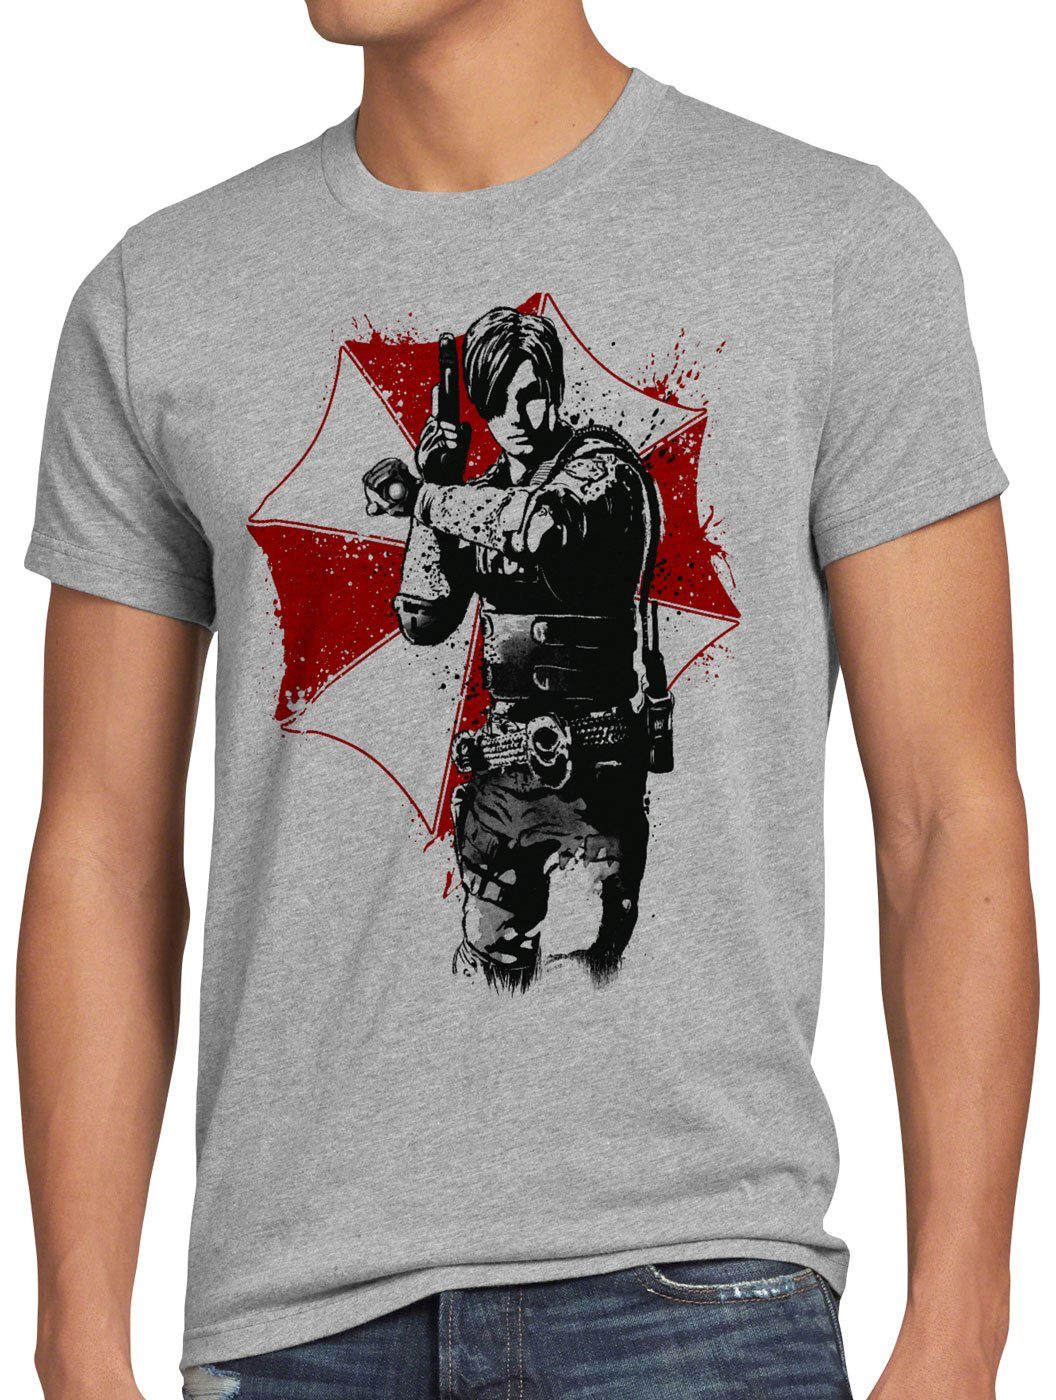 Raccoon City virus Police Herren grau T-Shirt Print-Shirt meliert videospiel epidemie style3